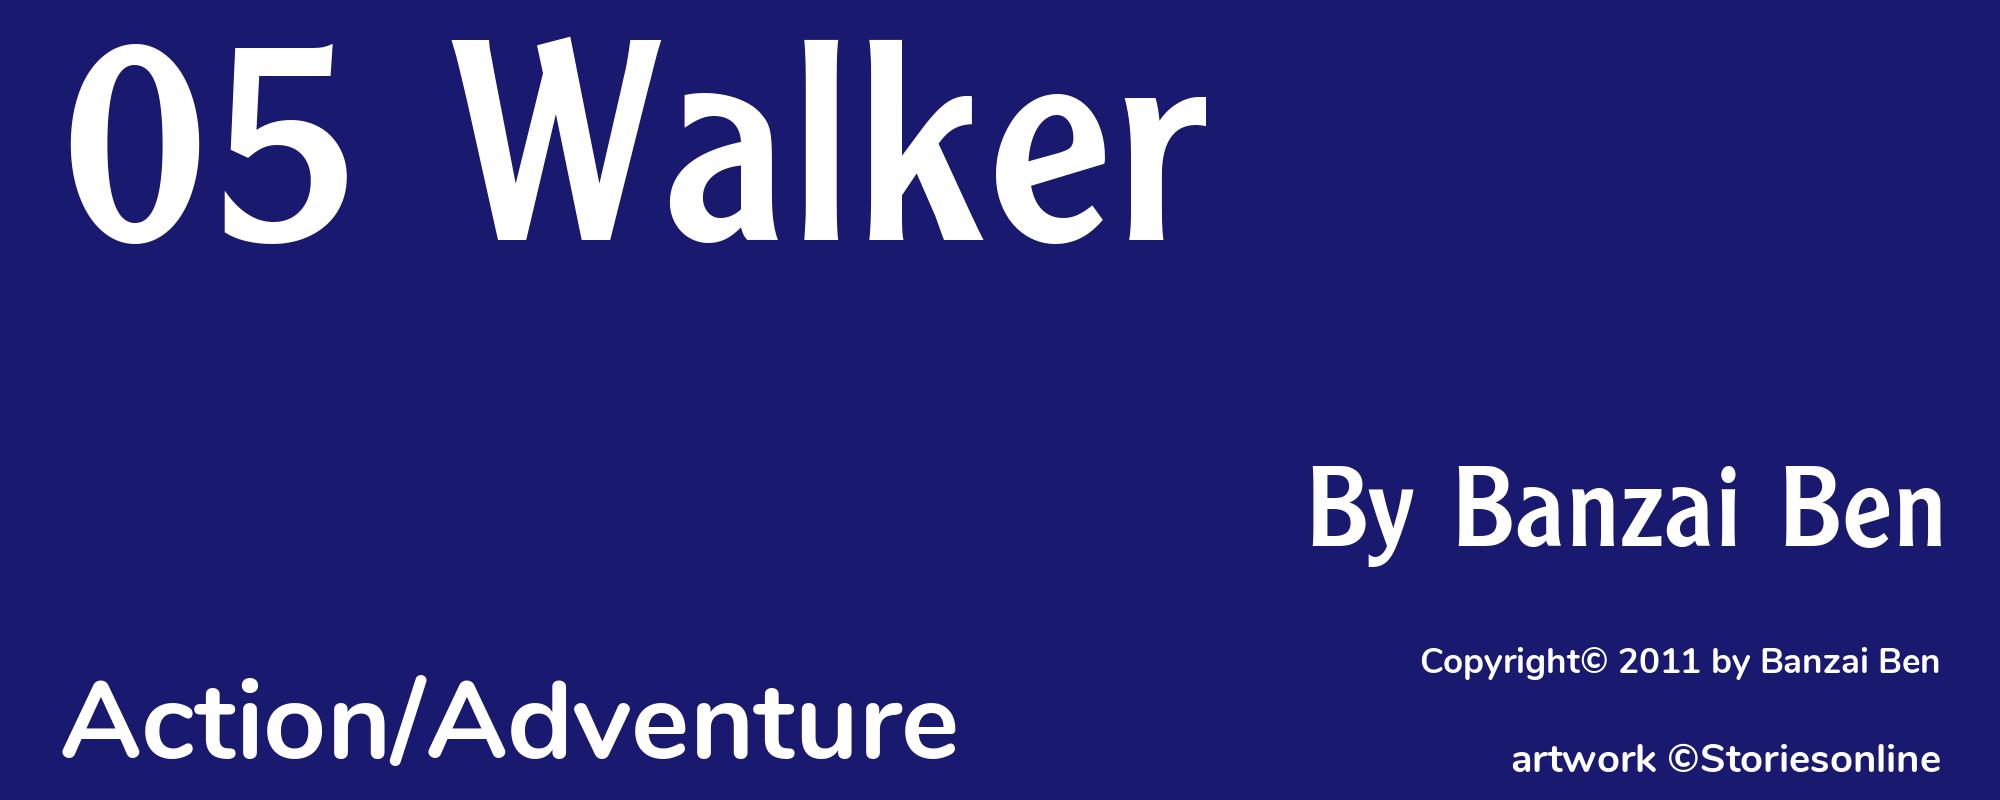 05 Walker - Cover